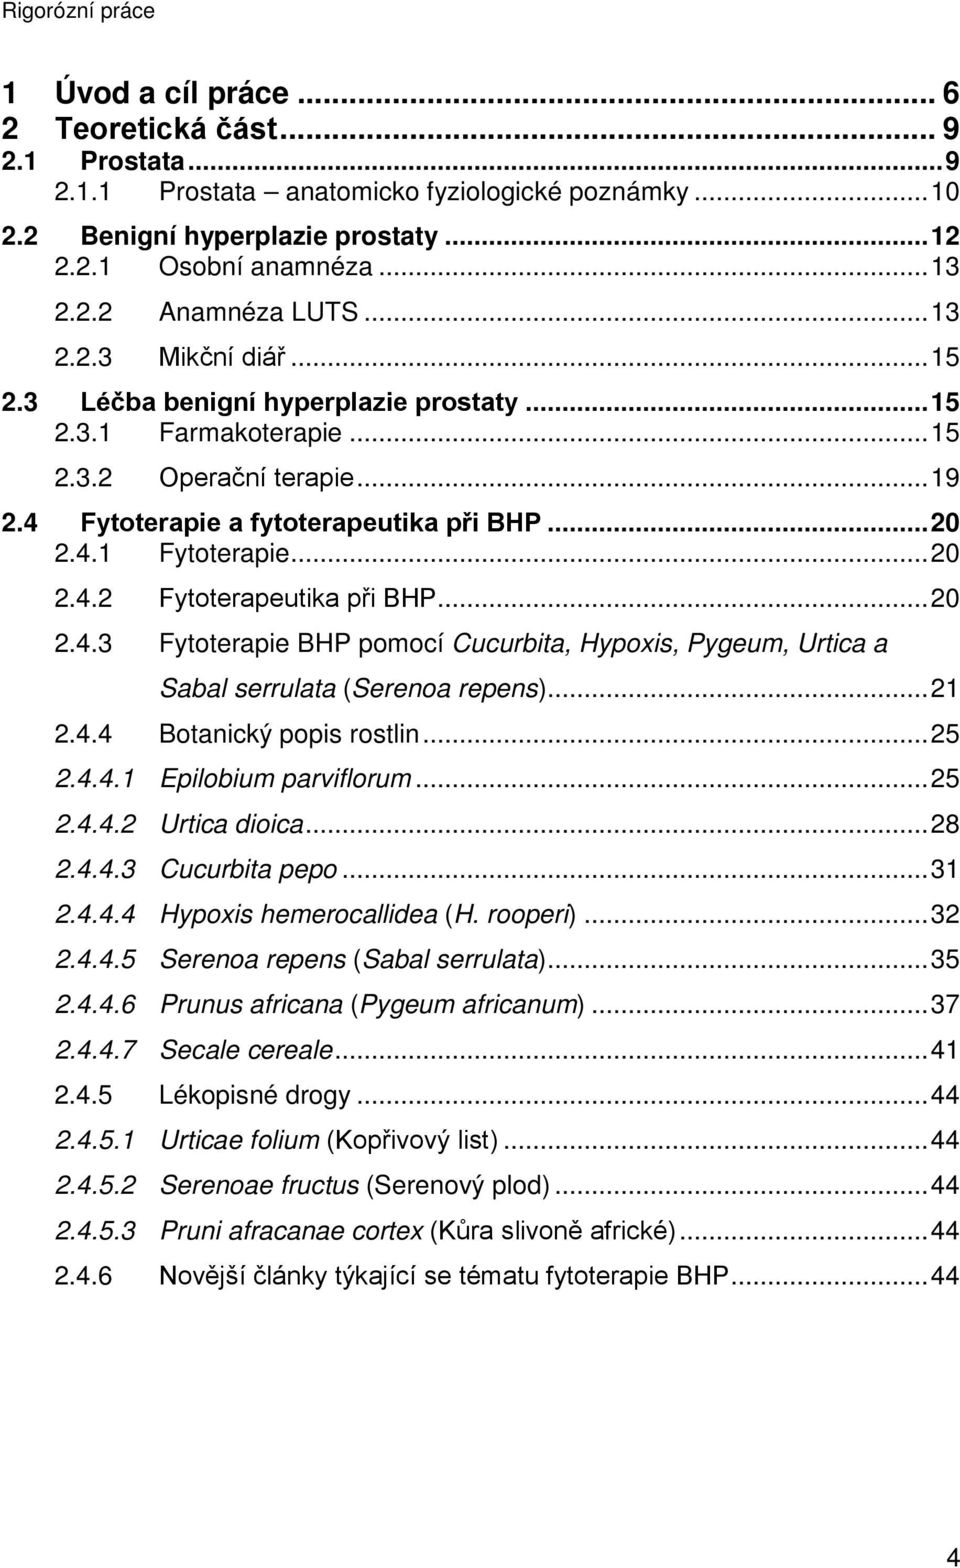 .. 20 2.4.2 Fytoterapeutika při BHP... 20 2.4.3 Fytoterapie BHP pomocí Cucurbita, Hypoxis, Pygeum, Urtica a Sabal serrulata (Serenoa repens)... 21 2.4.4 Botanický popis rostlin... 25 2.4.4.1 Epilobium parviflorum.